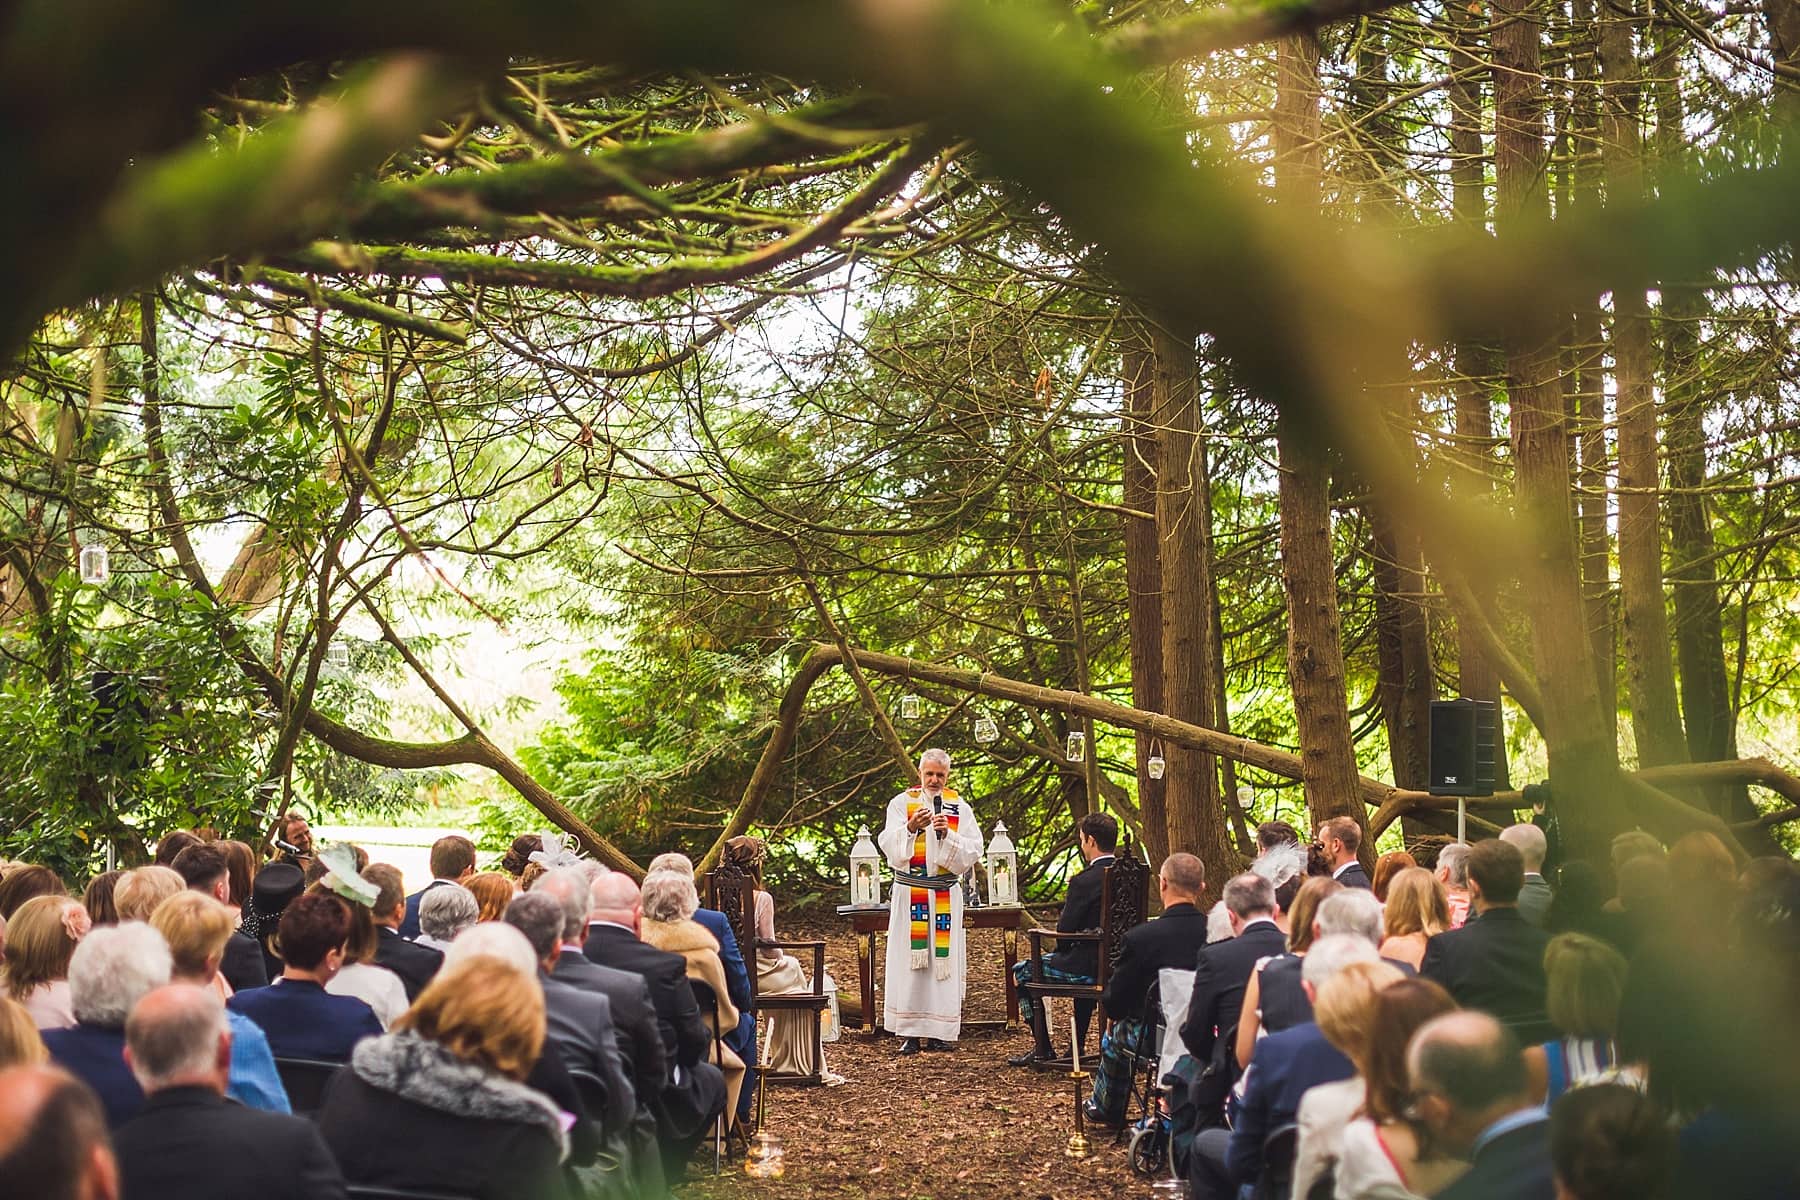 Markree Castle outdoor wedding,humanist ceremony,rainy wedding day,northern irish wedding photographer,